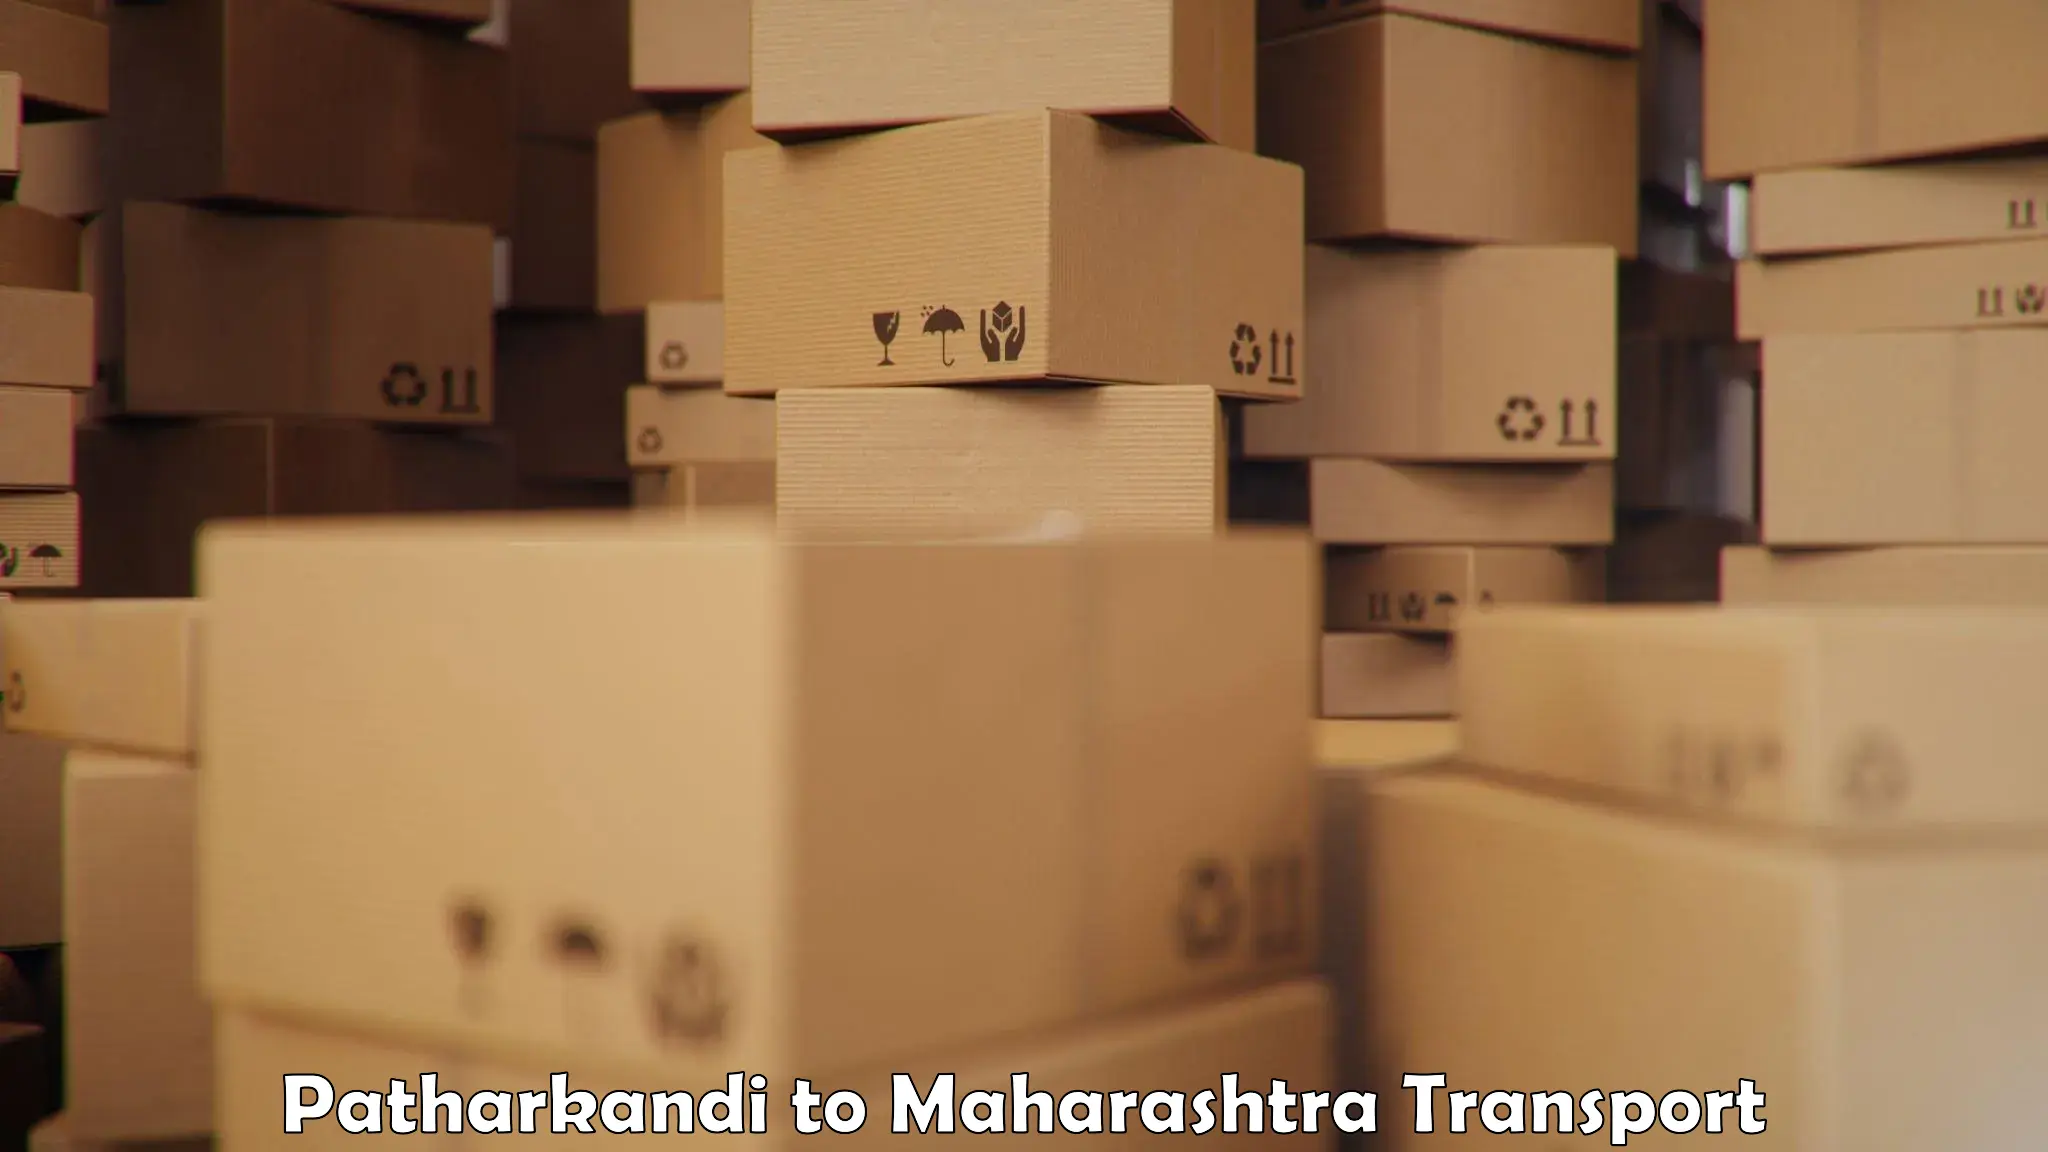 Truck transport companies in India Patharkandi to Gadhinglaj